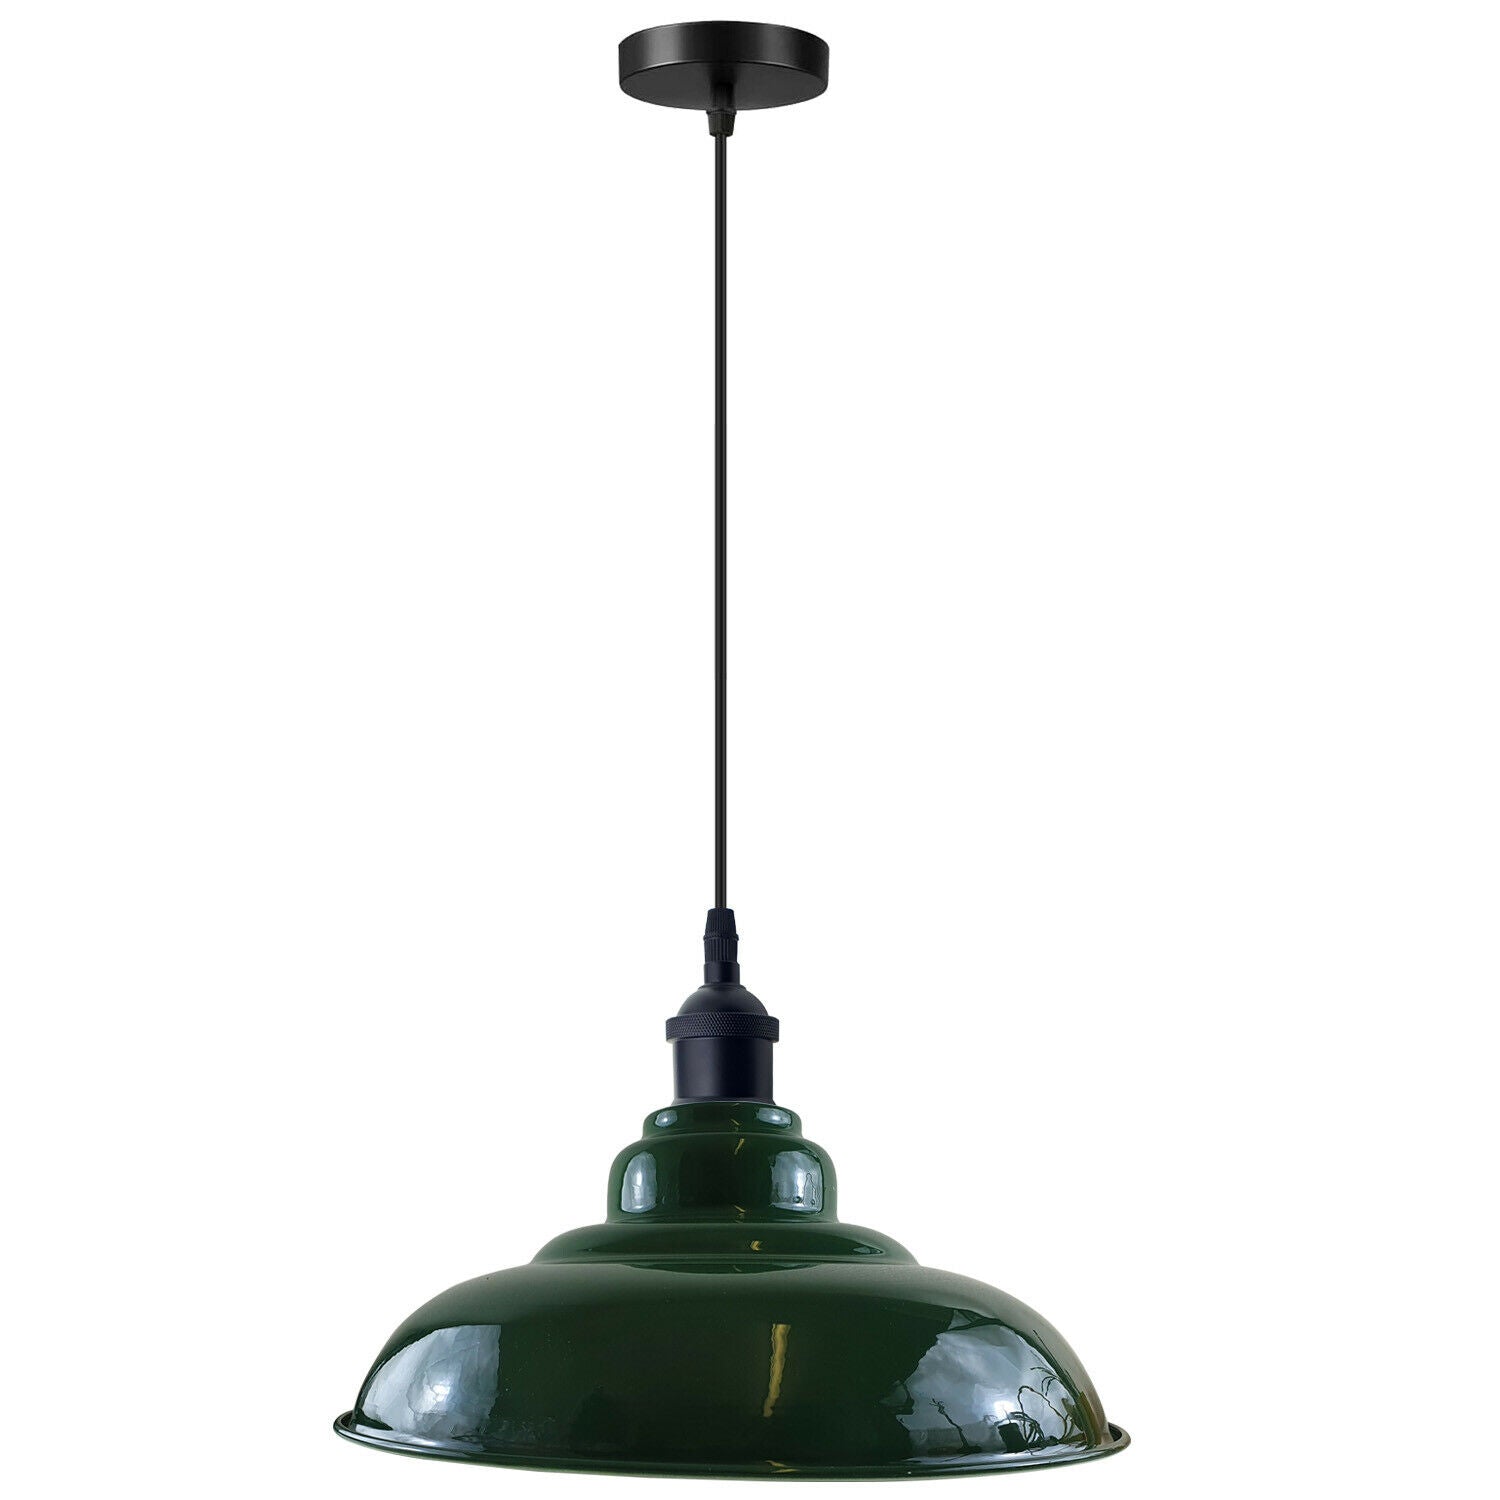 LEDSone industrial Vintage  32cm  Green Pendant Retro Metal Lamp Shade E27 Uk Holder~3688 - LEDSone UK Ltd